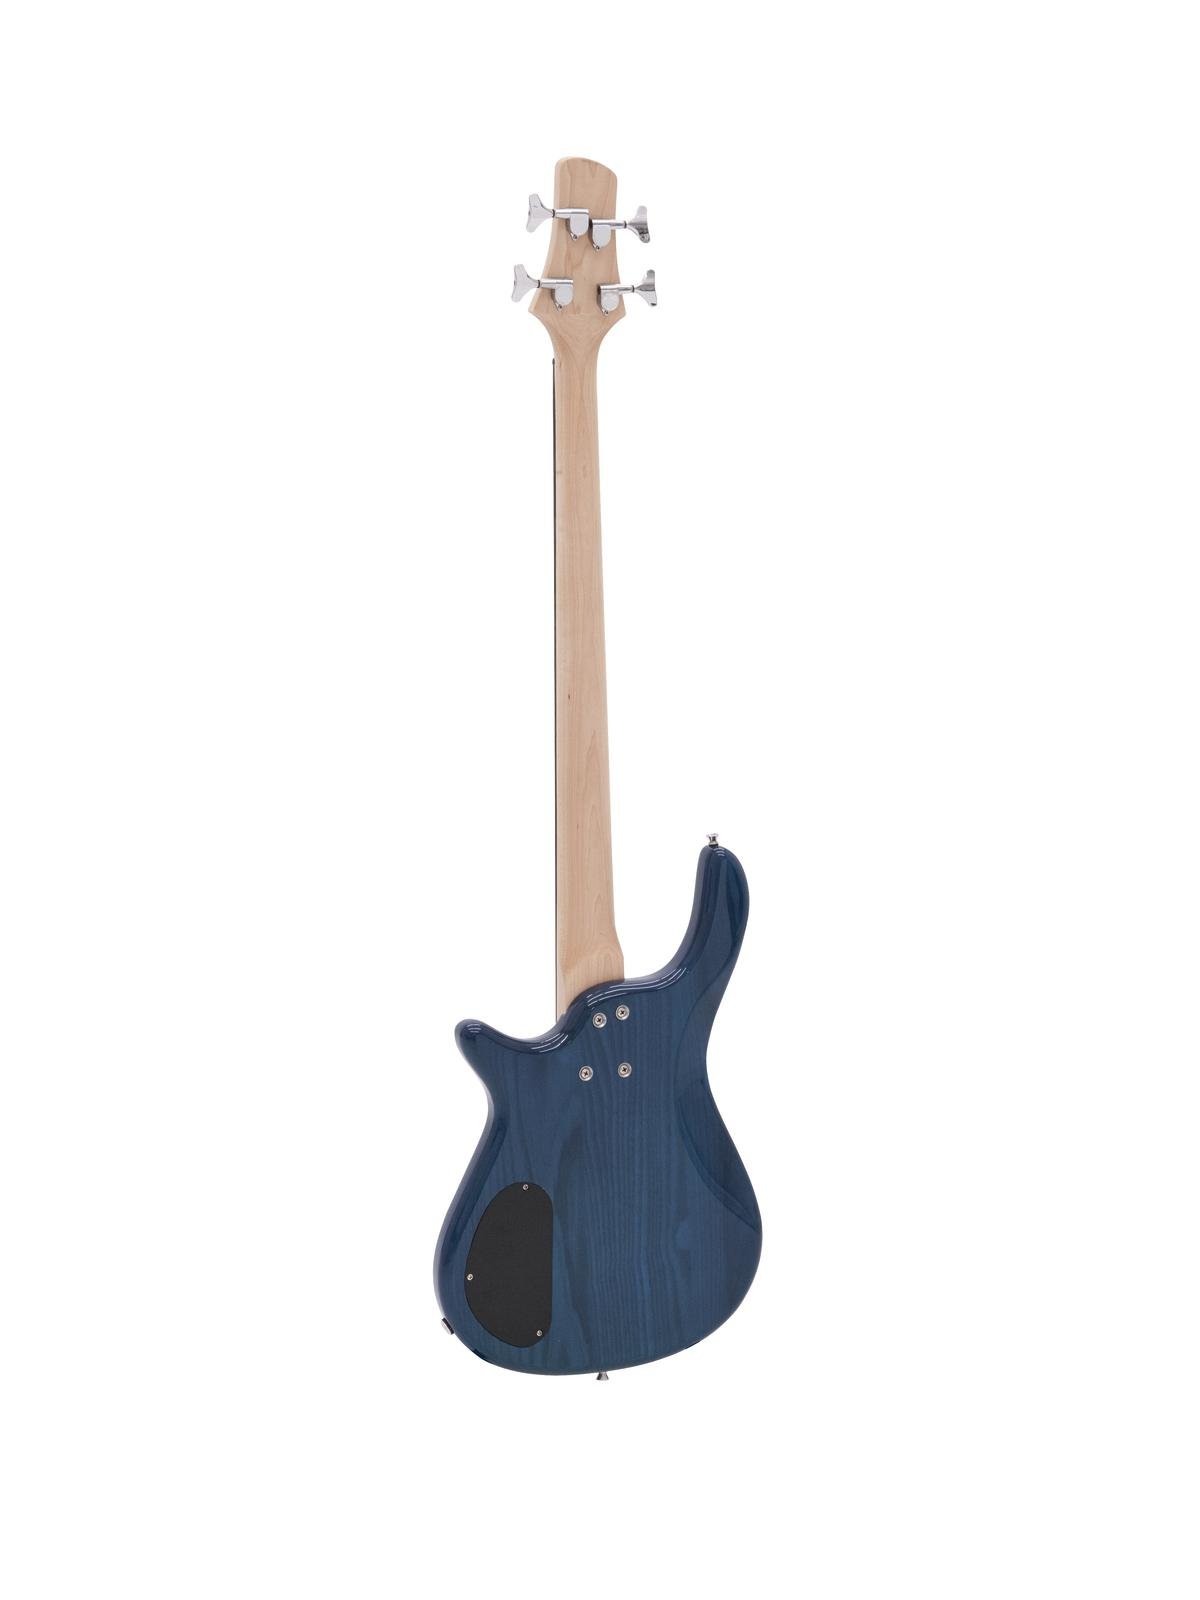 DIMAVERY SB-321 E-Bass, blue hi-gloss